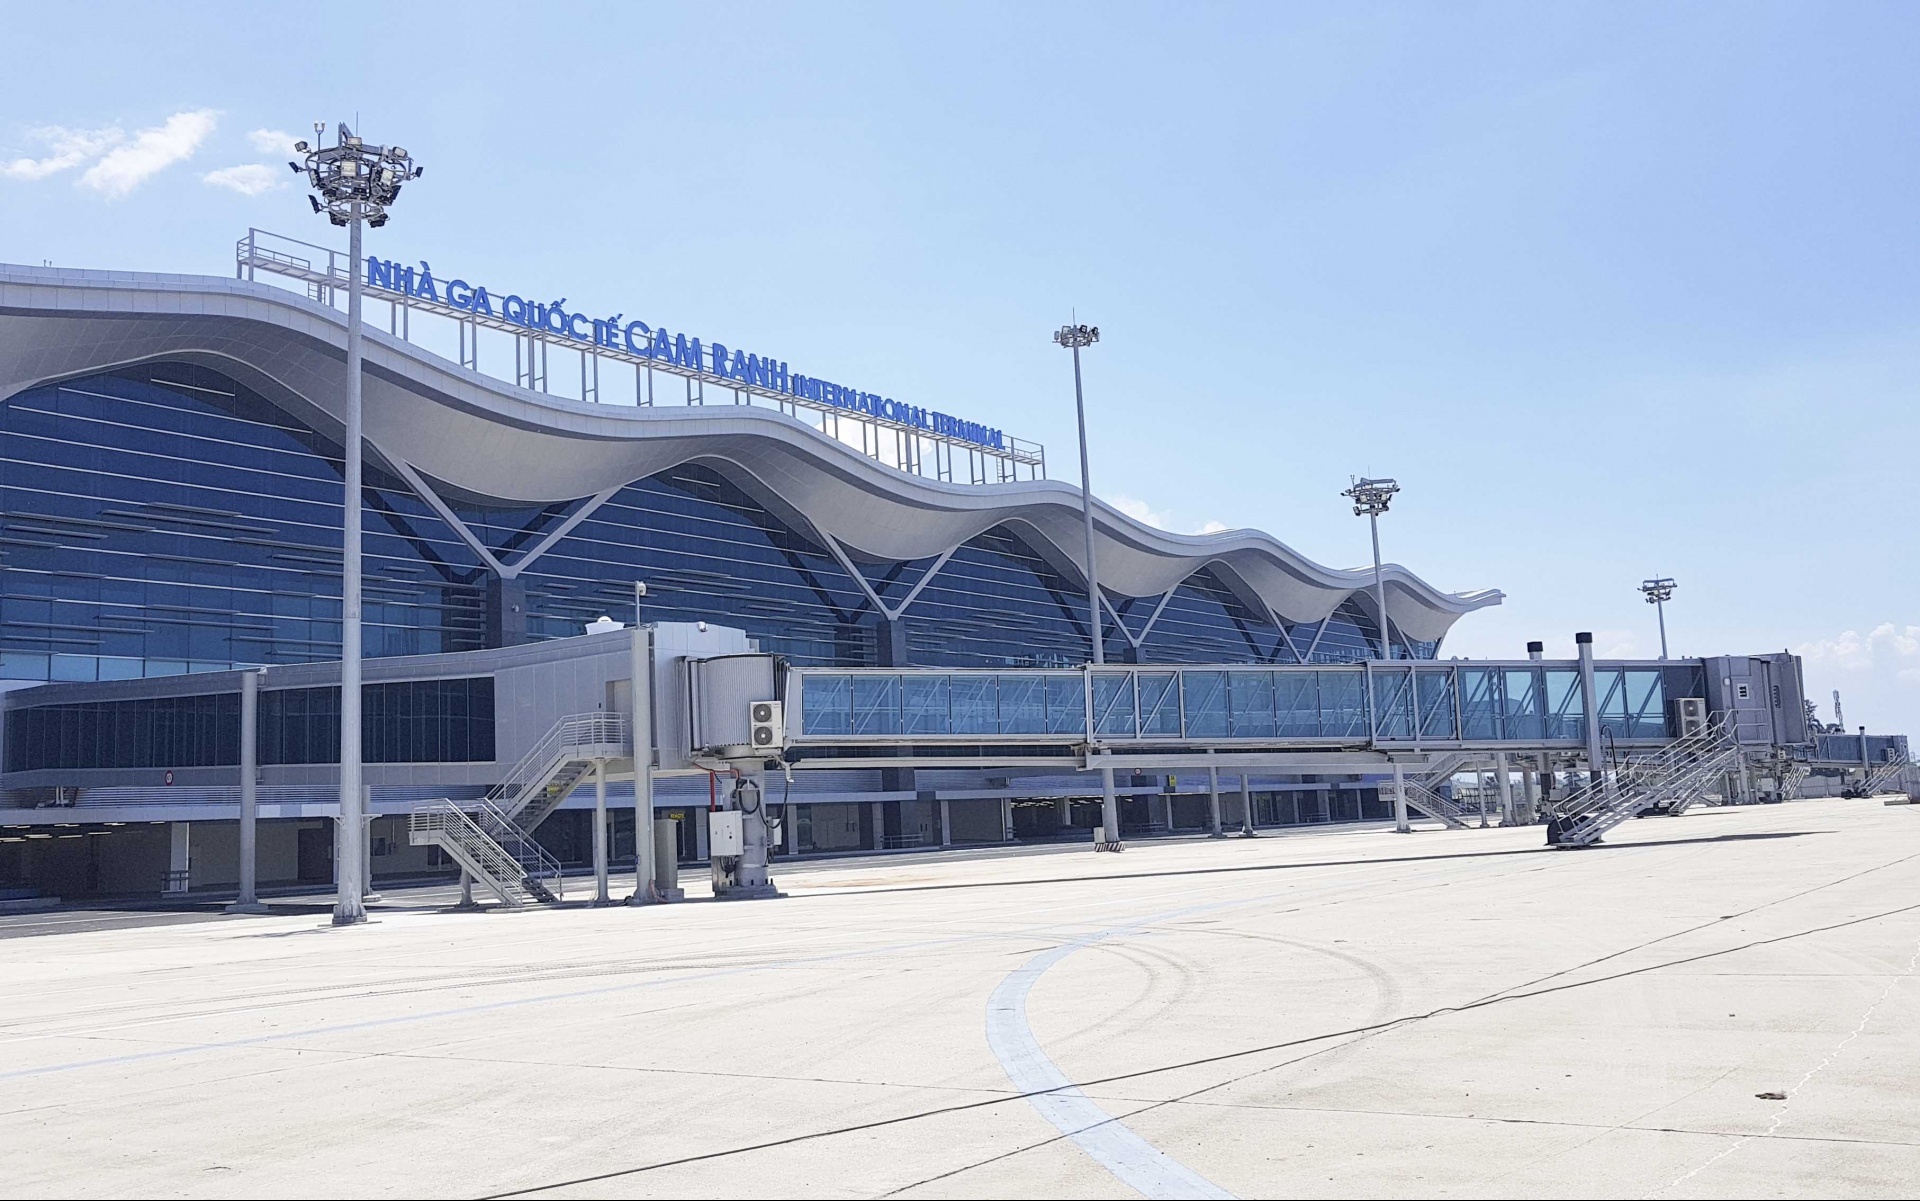 Cam Ranh International Airport needs $1.7 billion upgrade